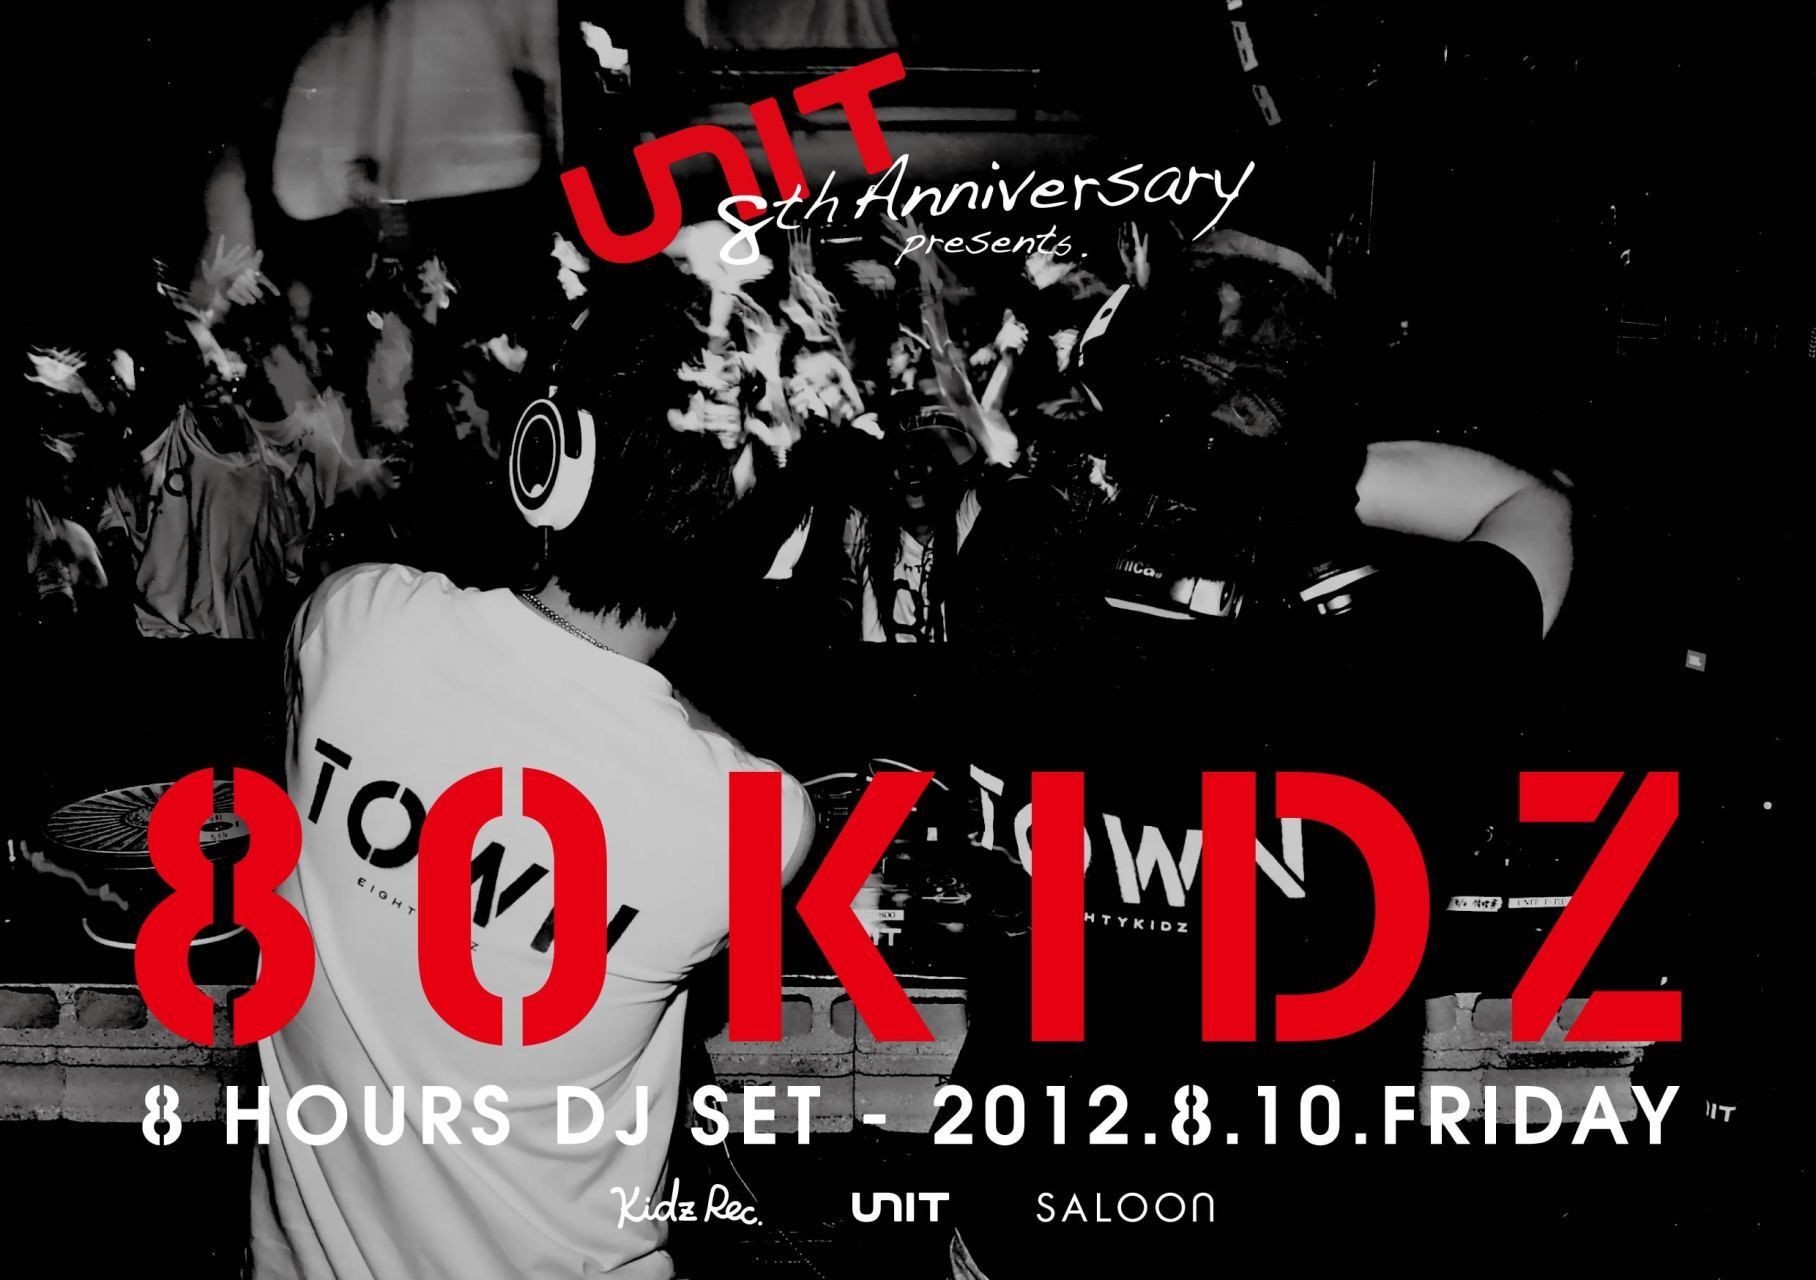 UNIT 8th Anniversary: 80KIDZ - 8 HOURS DJ SET Main Image